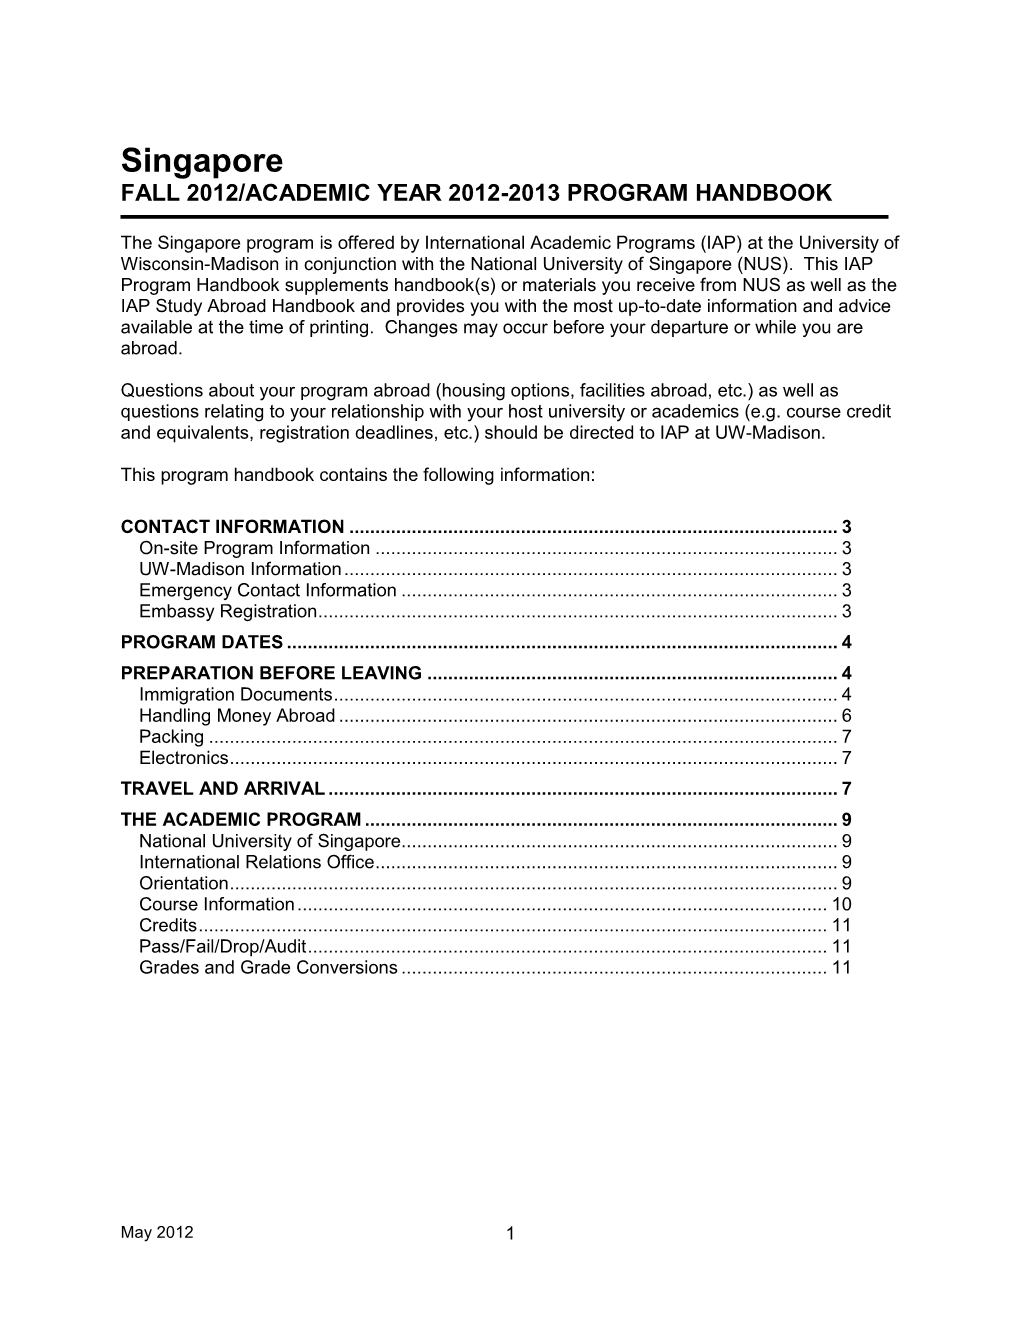 Singapore FALL 2012/ACADEMIC YEAR 2012-2013 PROGRAM HANDBOOK